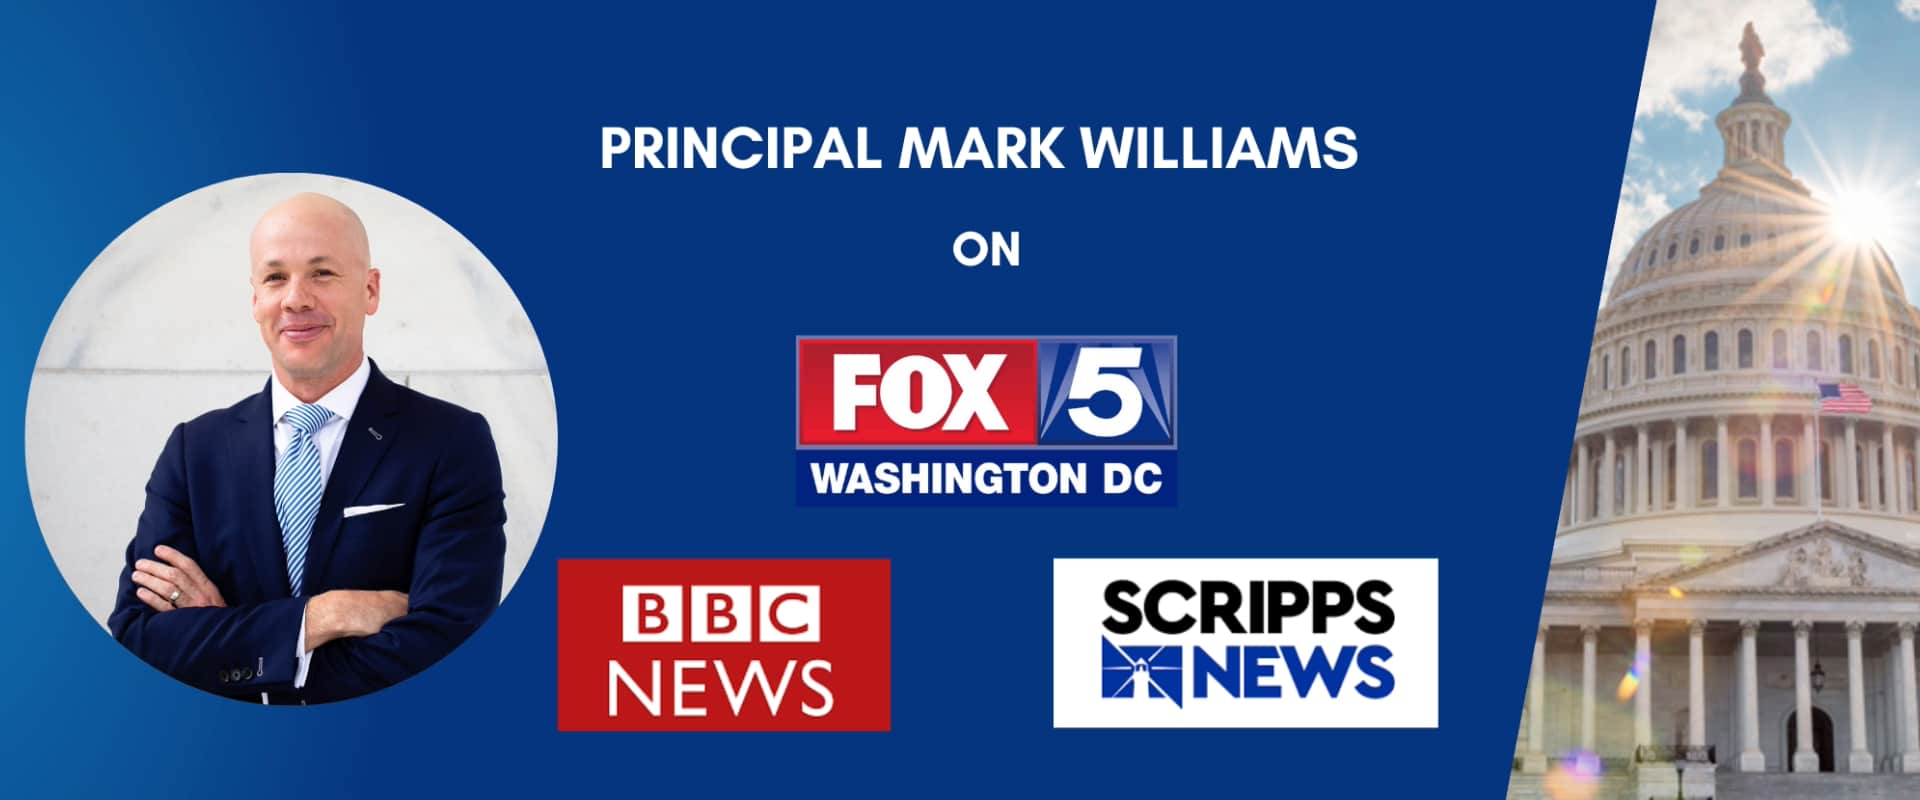 Principal Mark Williams